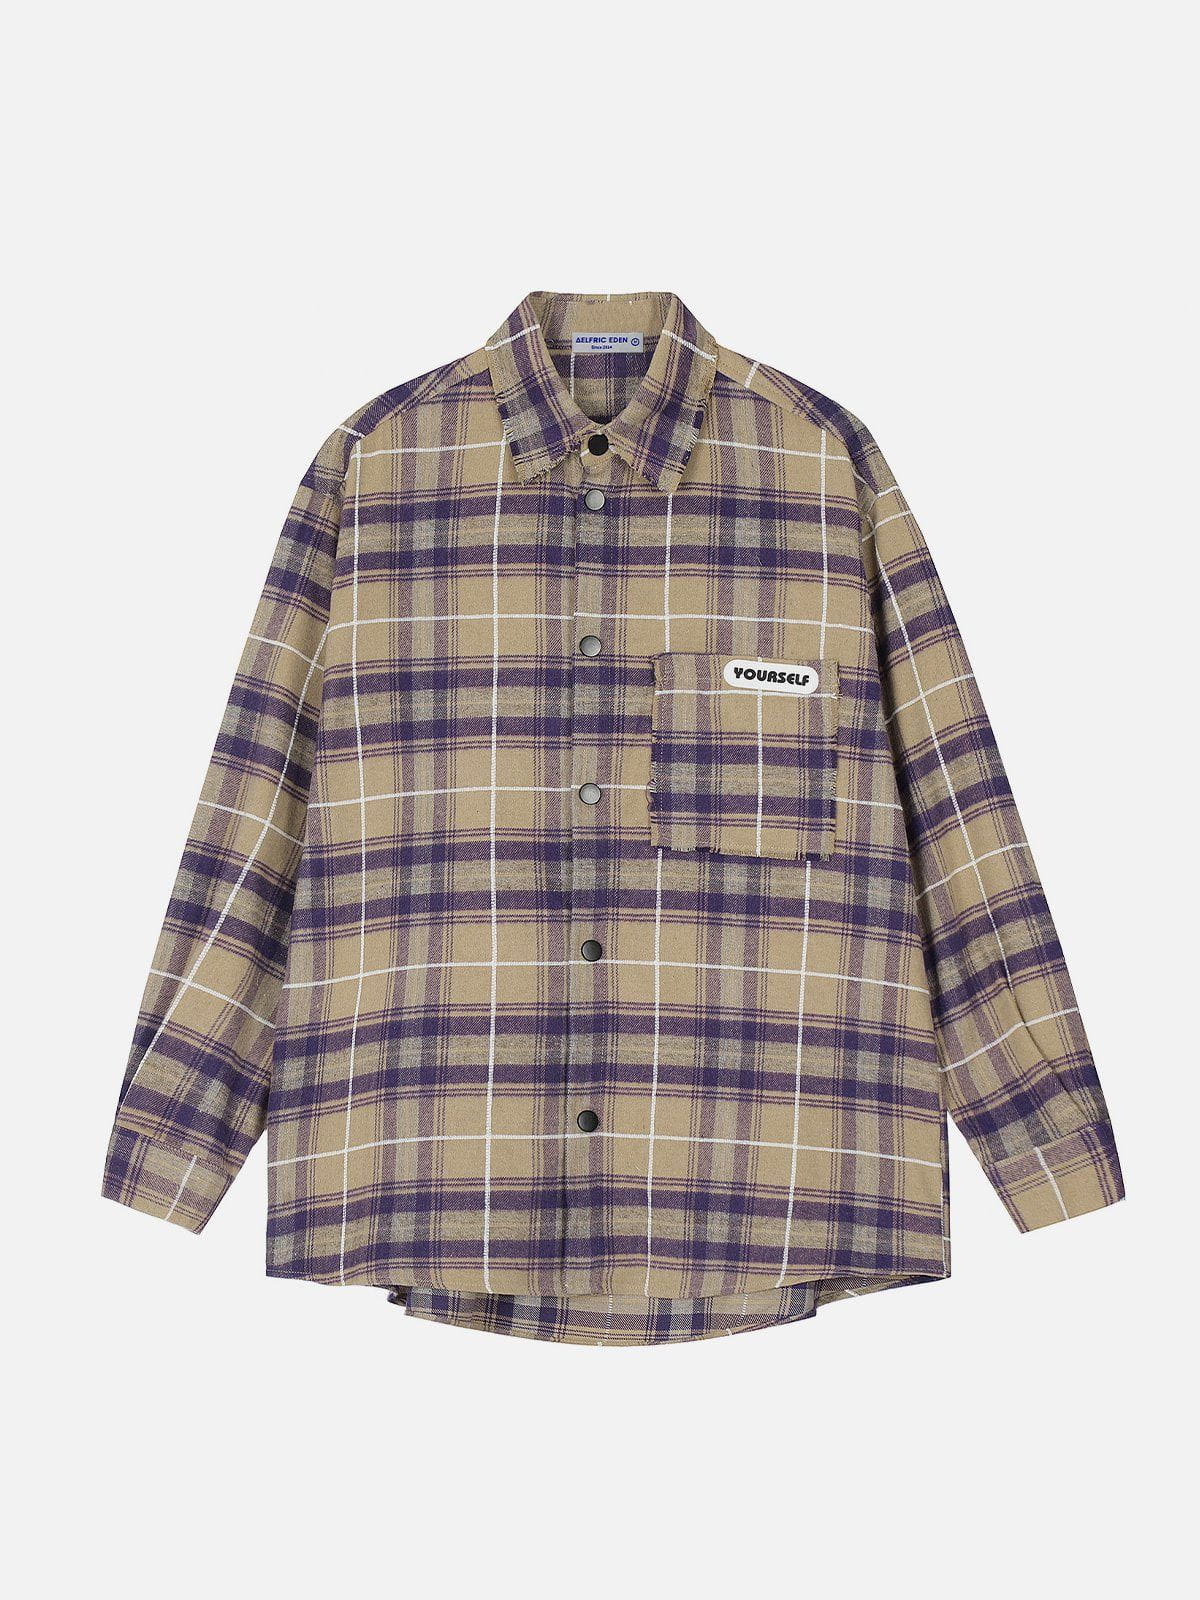 Aelfric Eden Vintage Plaid Long Sleeve Shirt – Aelfric eden